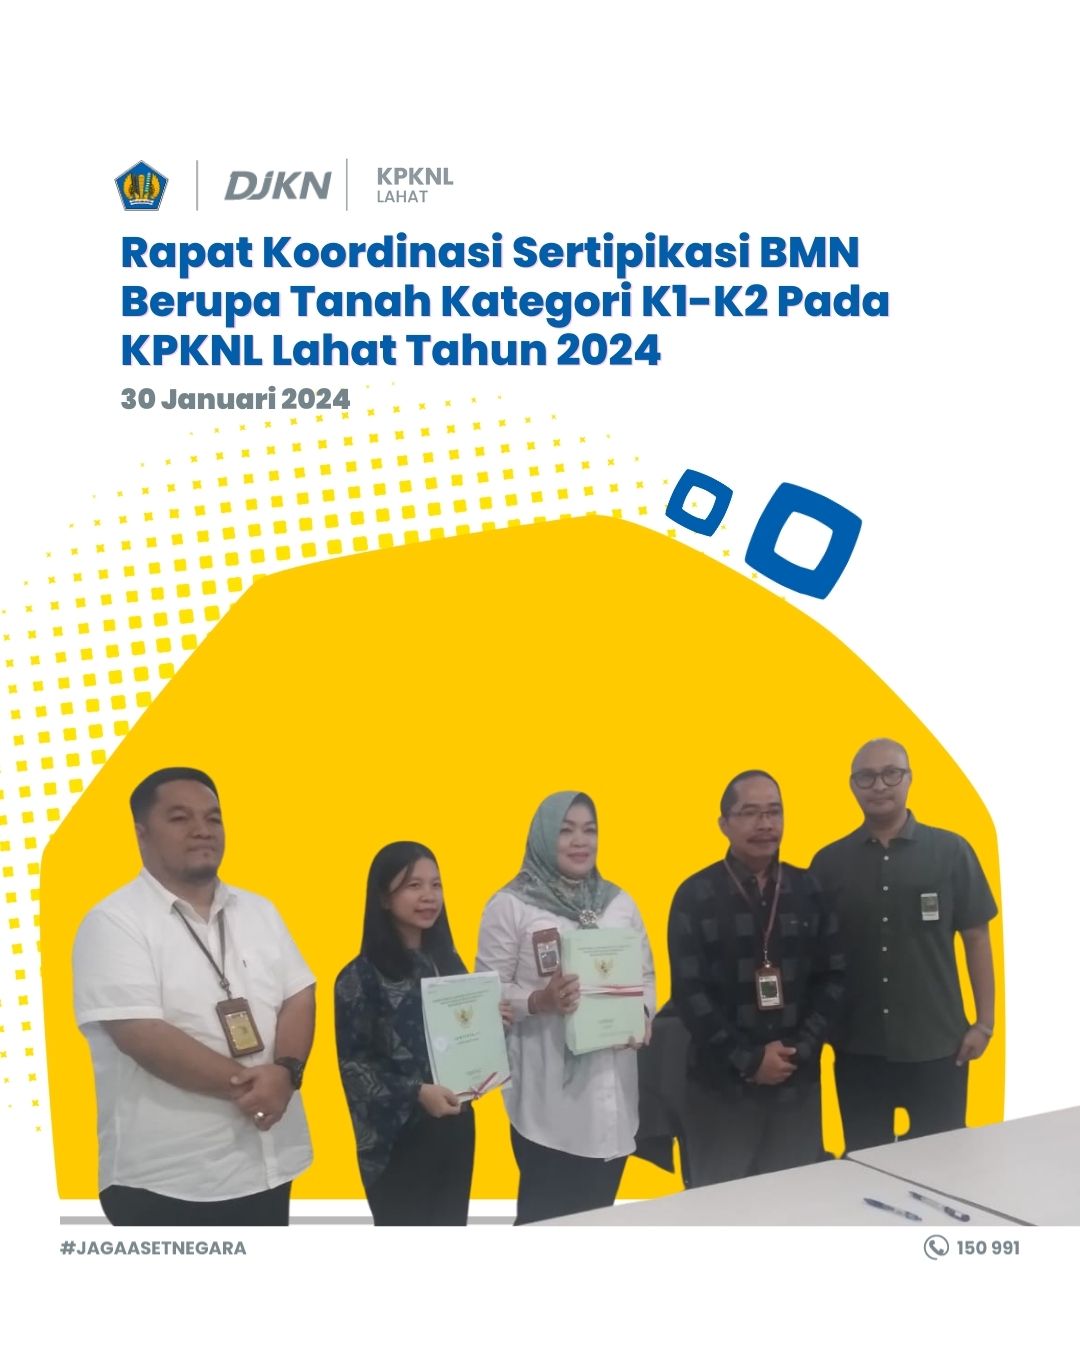 Rapat Koordinasi Sertipikasi BMN Berupa Tanah Kategori K1-K2 Pada KPKNL Lahat